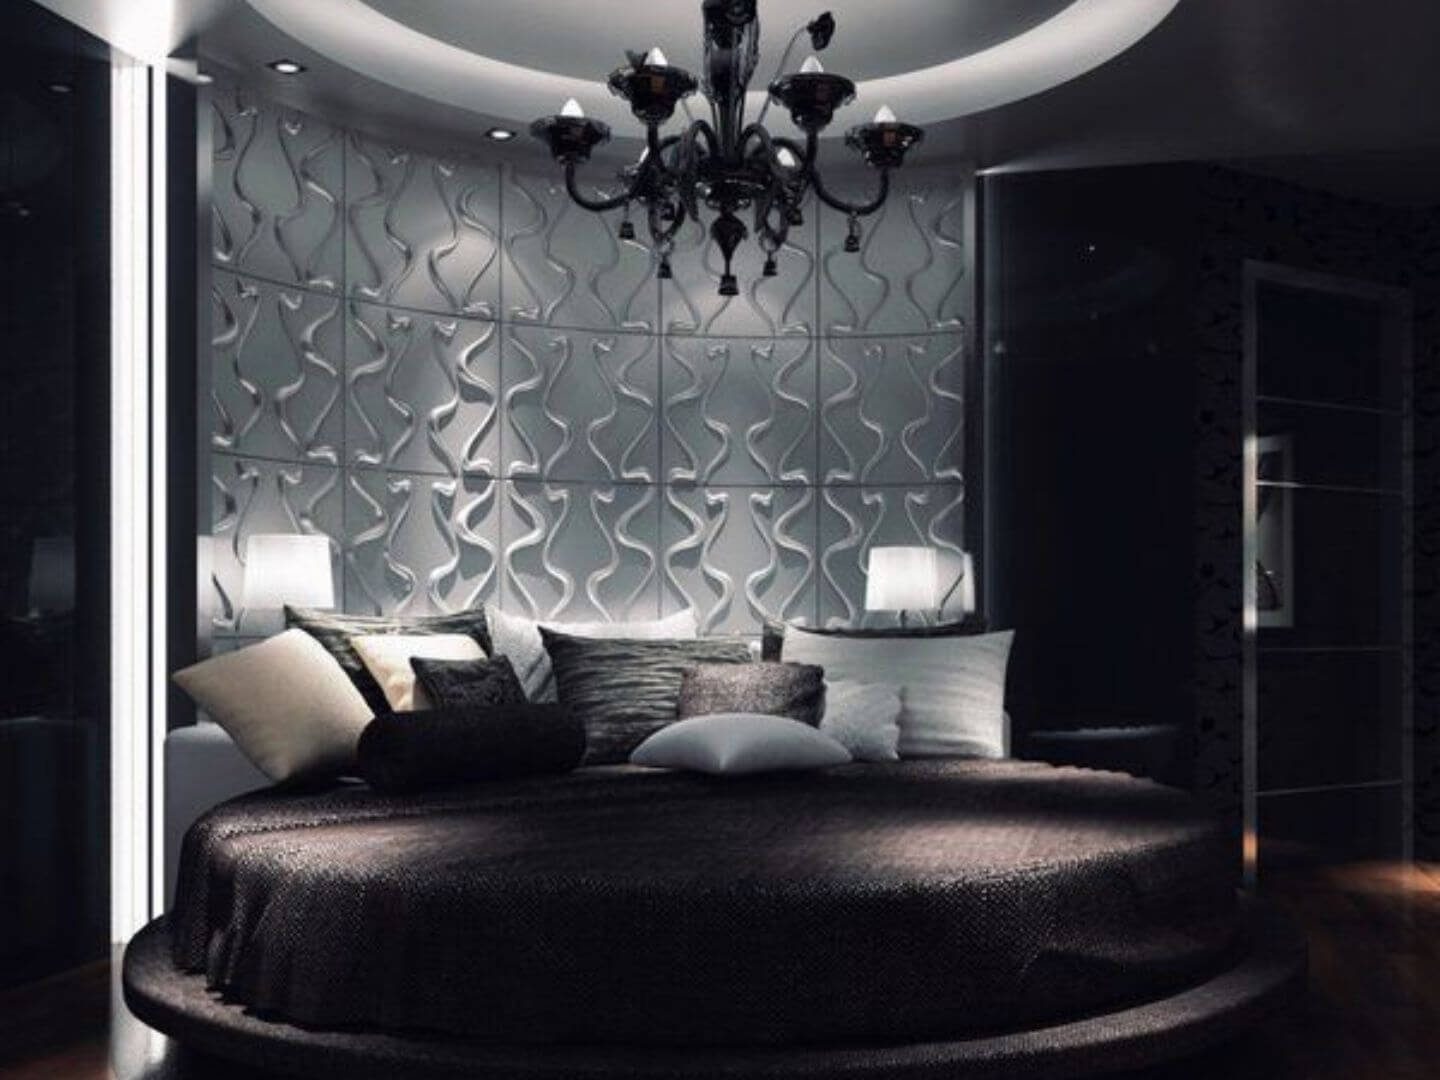 round bed in bedroom interior design